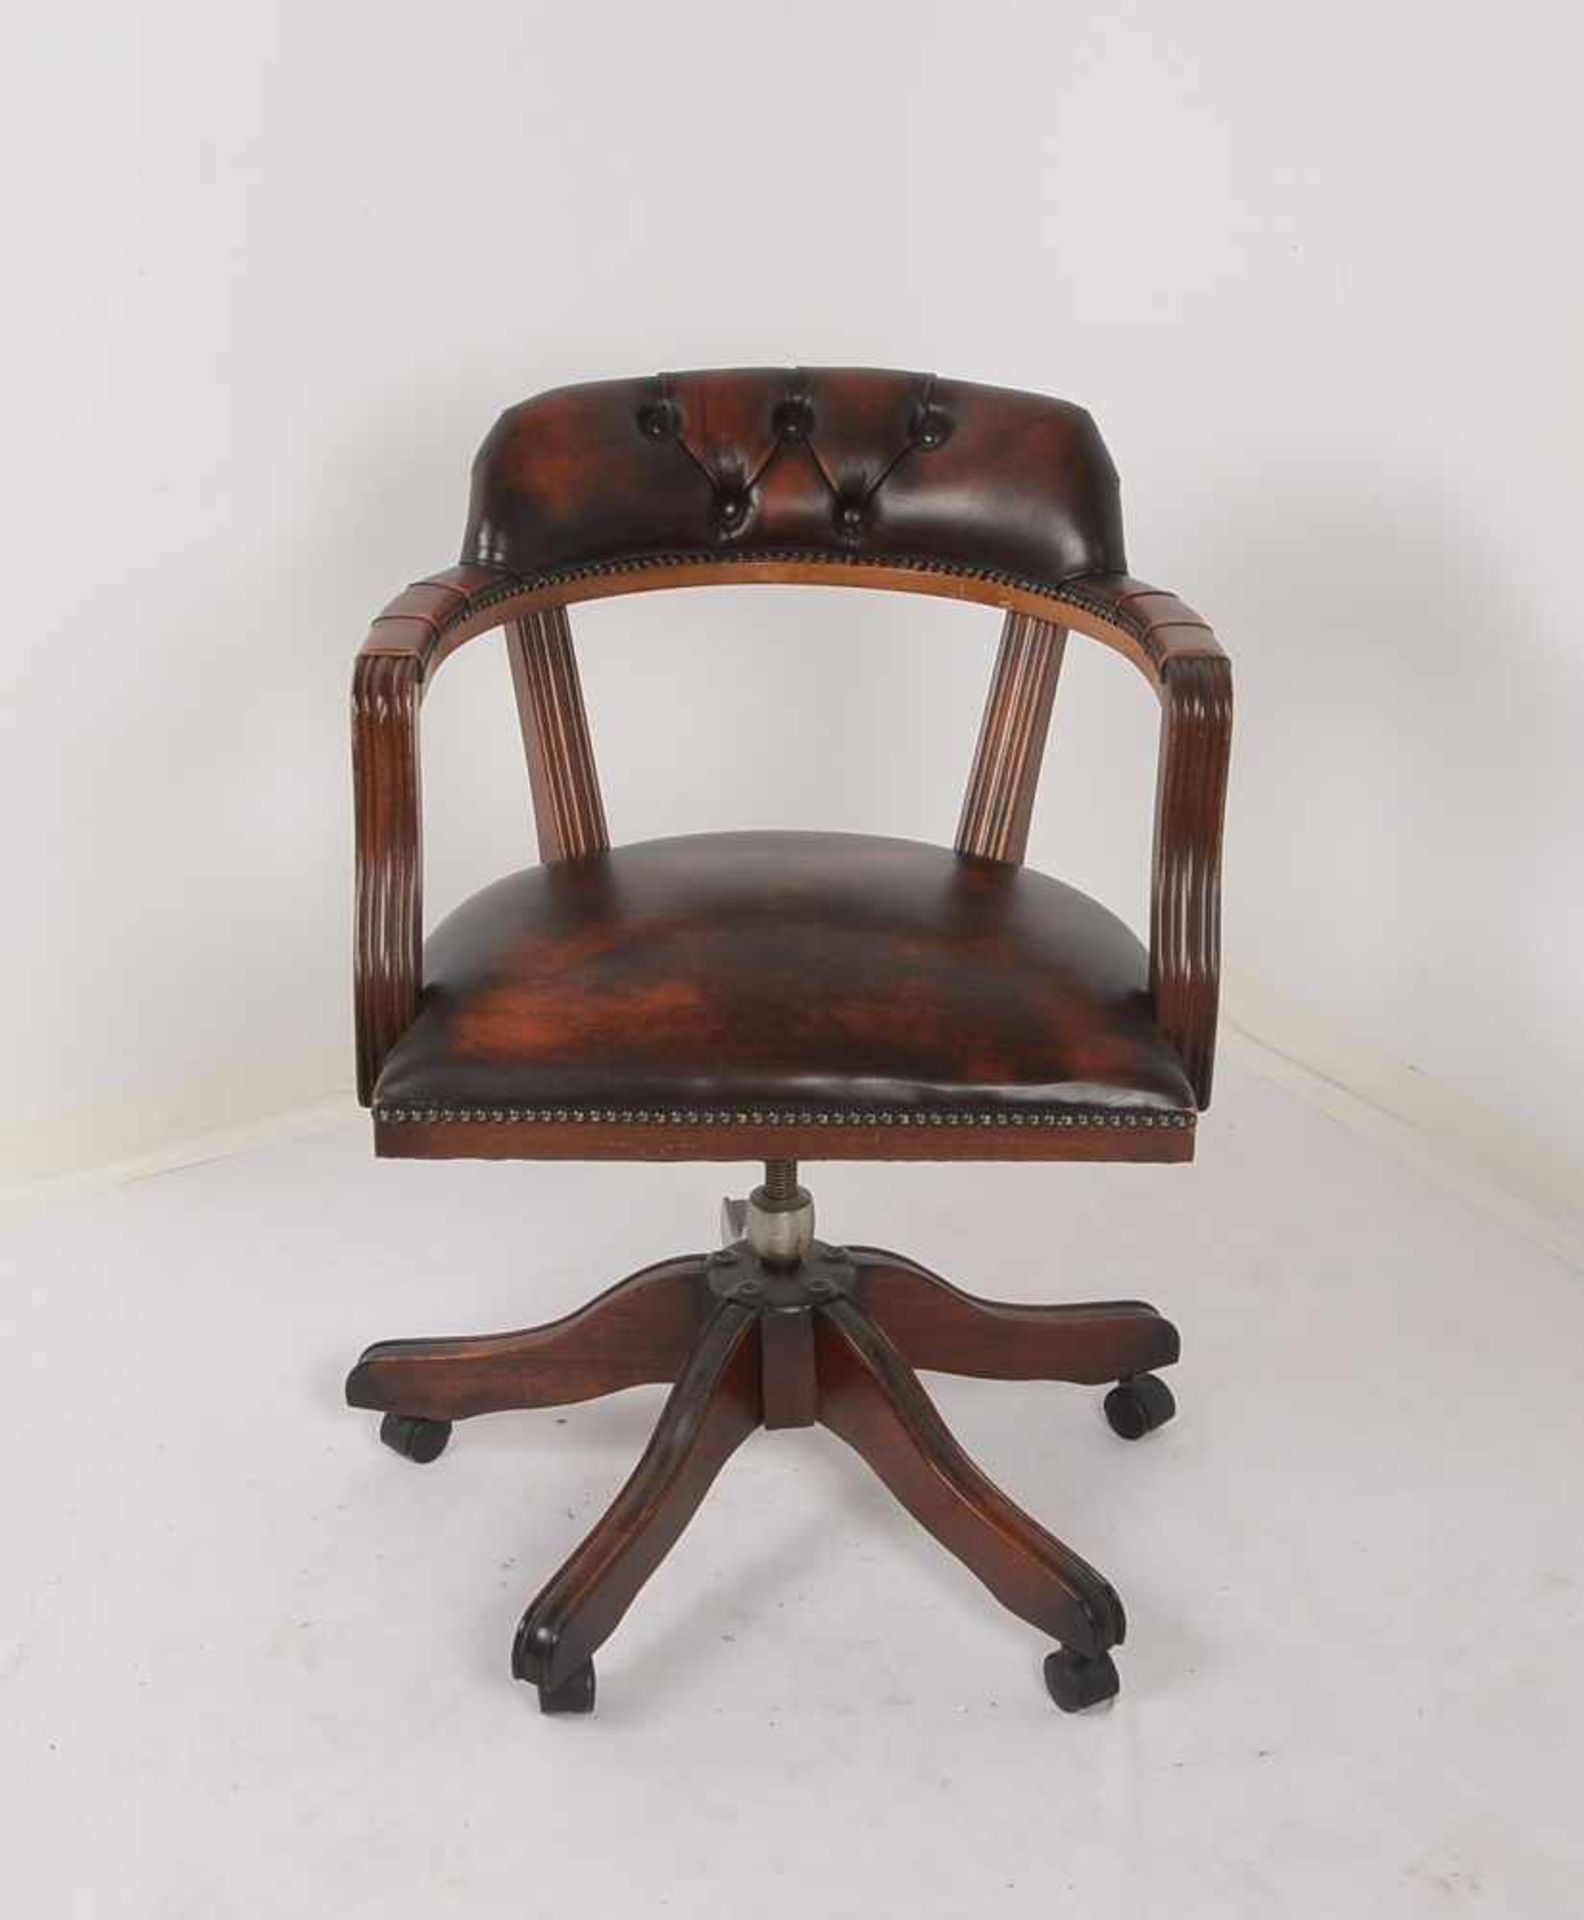 Schreibtischstuhl/'Captain's Chair', Mahagoniholz, mit Lederbezug/gepolstert, Höhen-Dreh-Verstellung - Bild 2 aus 2